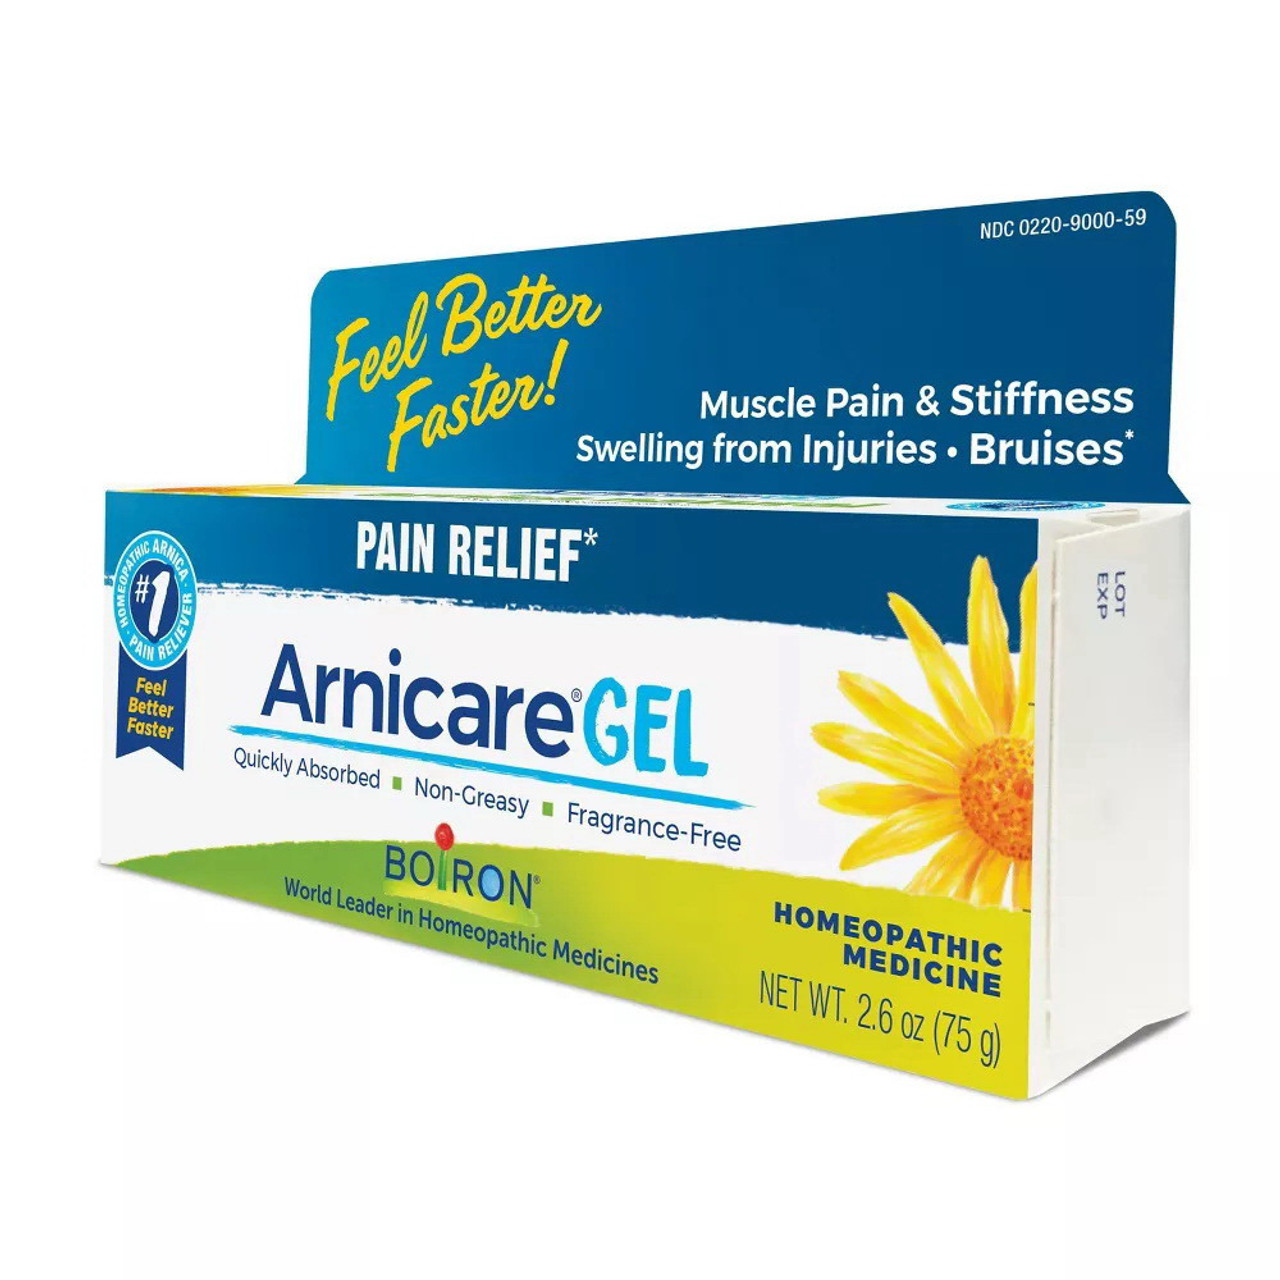 Boiron Arnicare® Arnica Gel Value Pack Topical & Oral Pellets -- 2.6 oz